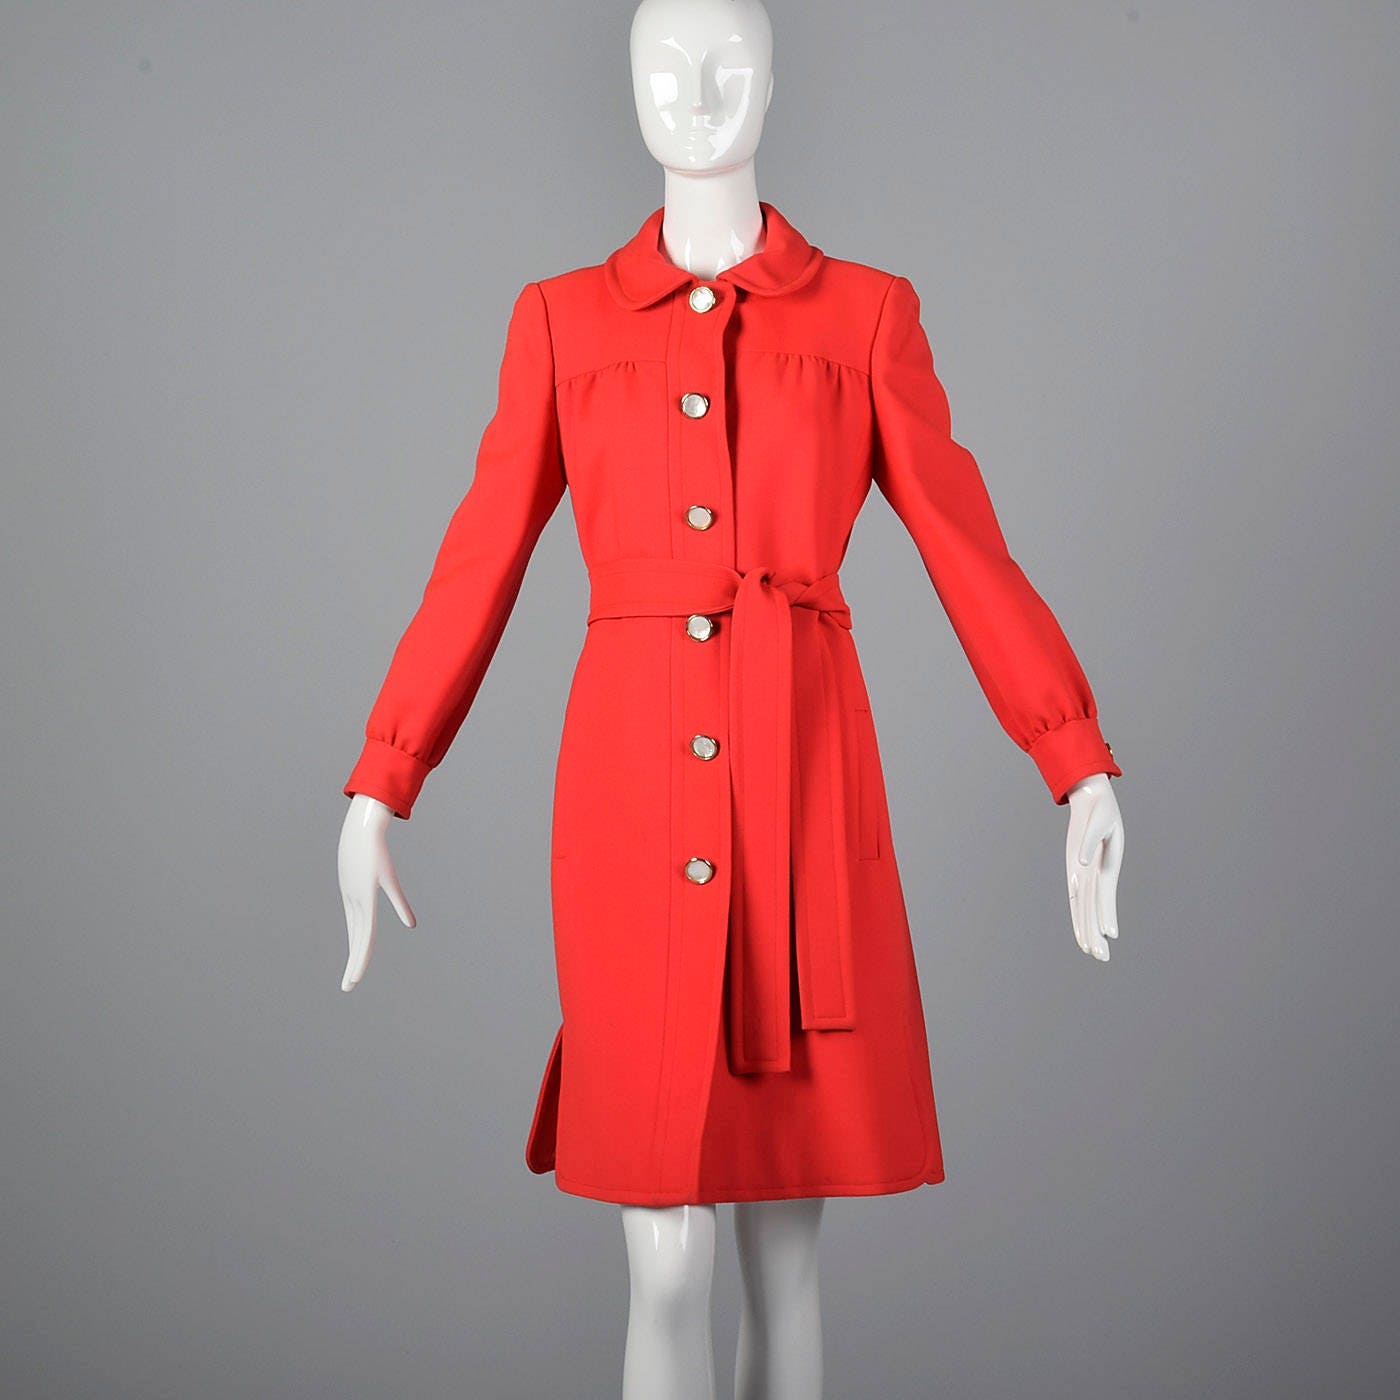 Medium 1960s Dress Red Coat Dress Long Sleeve Shift Style | Etsy